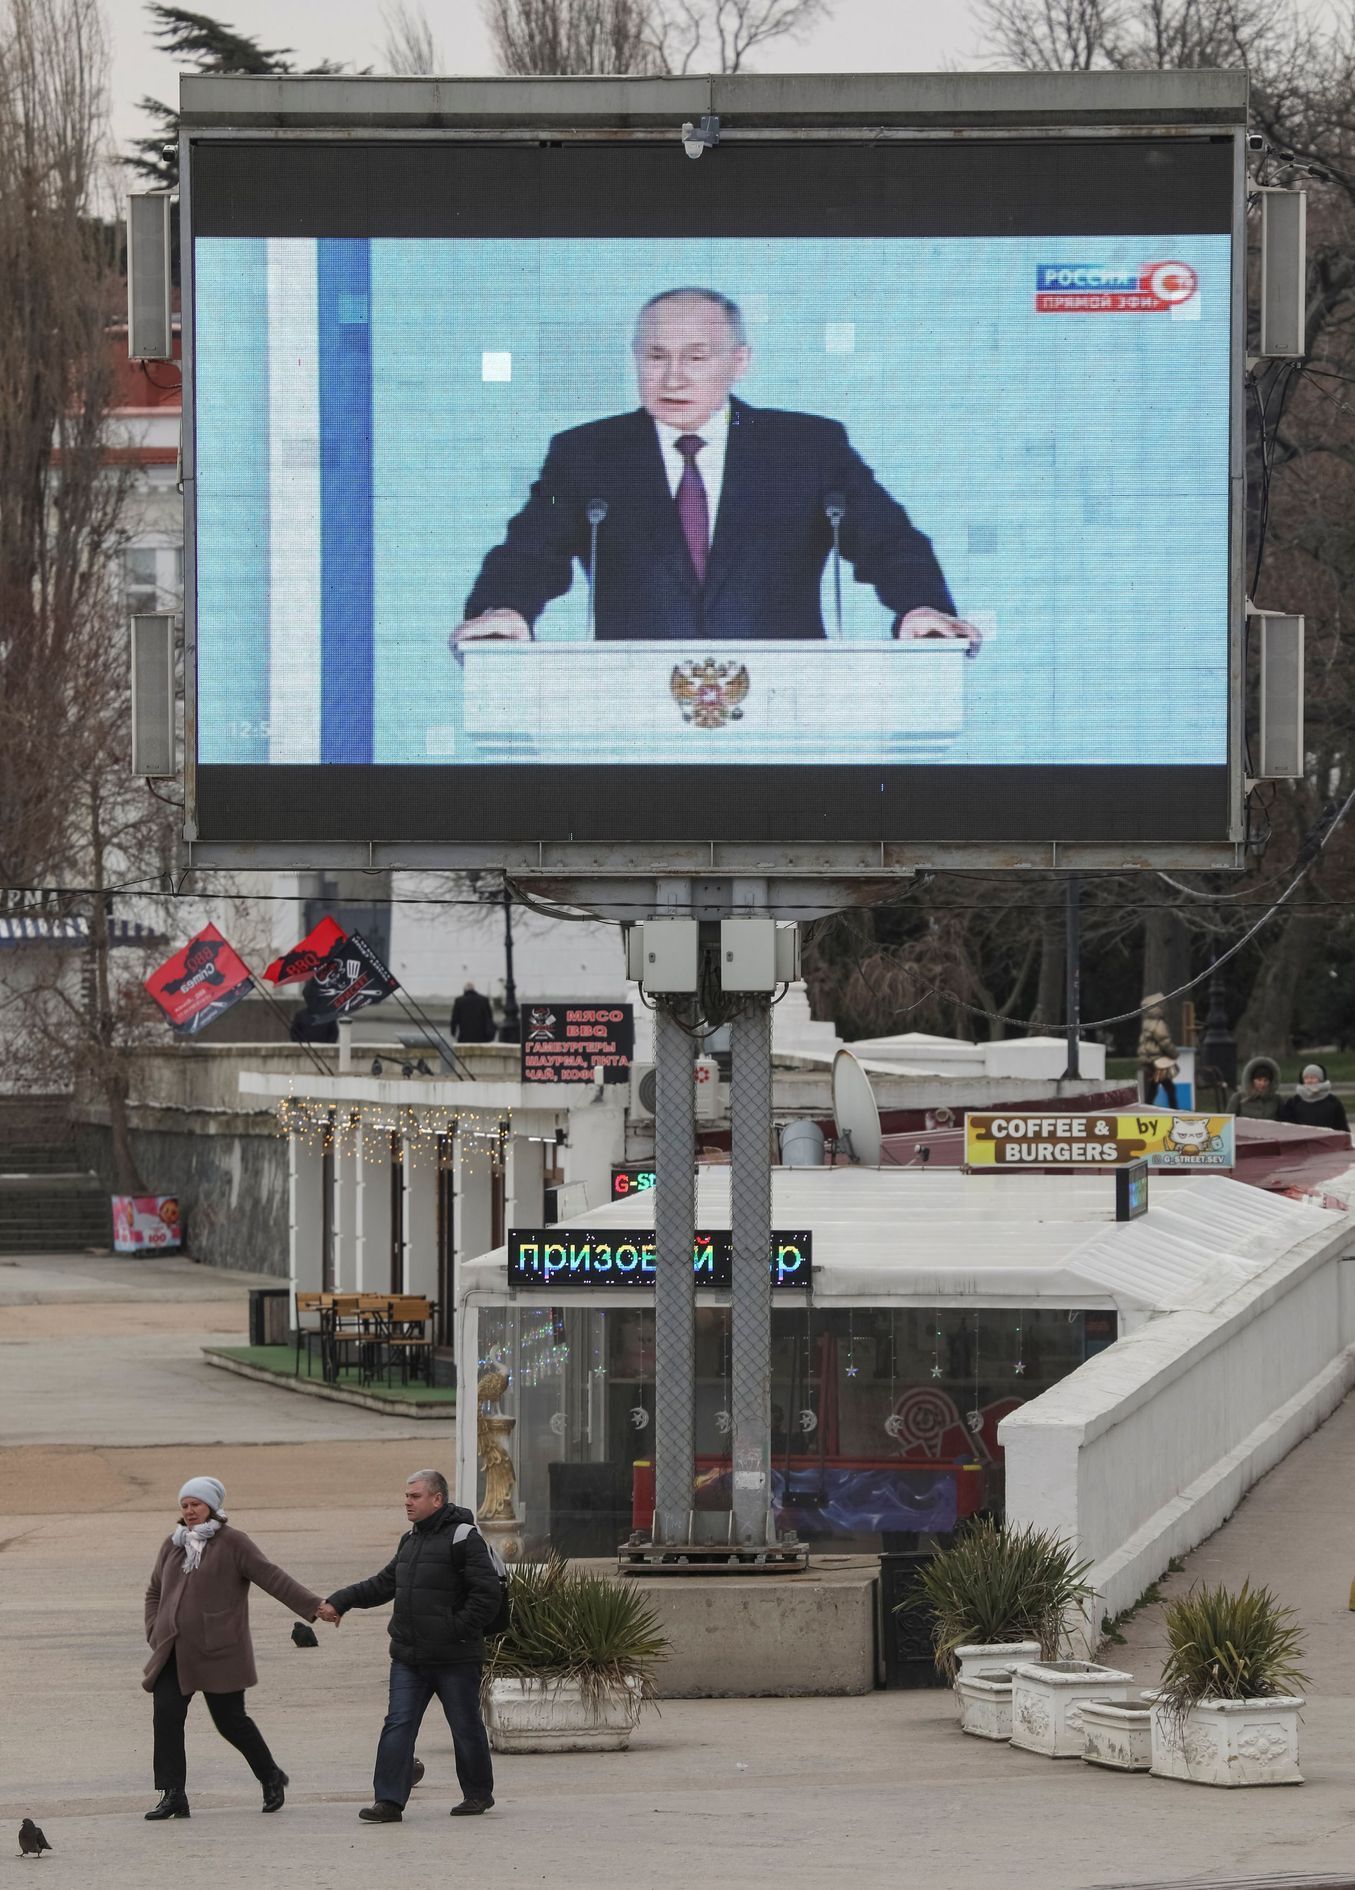 Projev Putina, přenášený na obrazovku v Sevastopolu na Krymu.